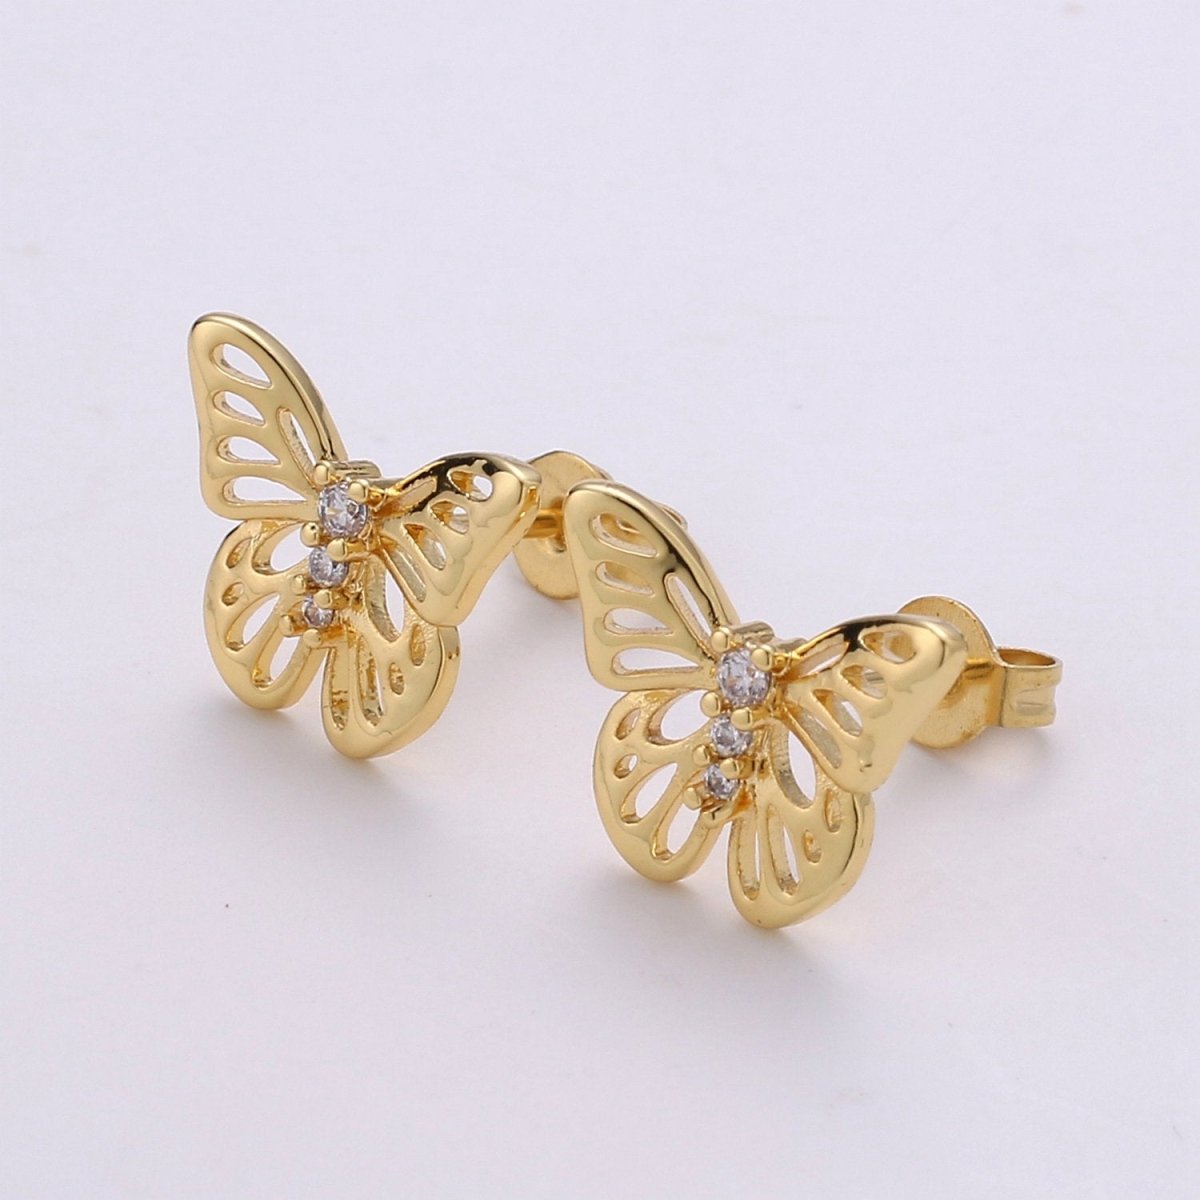 Dainty butterfly stud earrings in gold Small butterfly studs, mini butterfly earrings, Animal Jewelry Lover Insect minimalist earrings Q-187 - DLUXCA